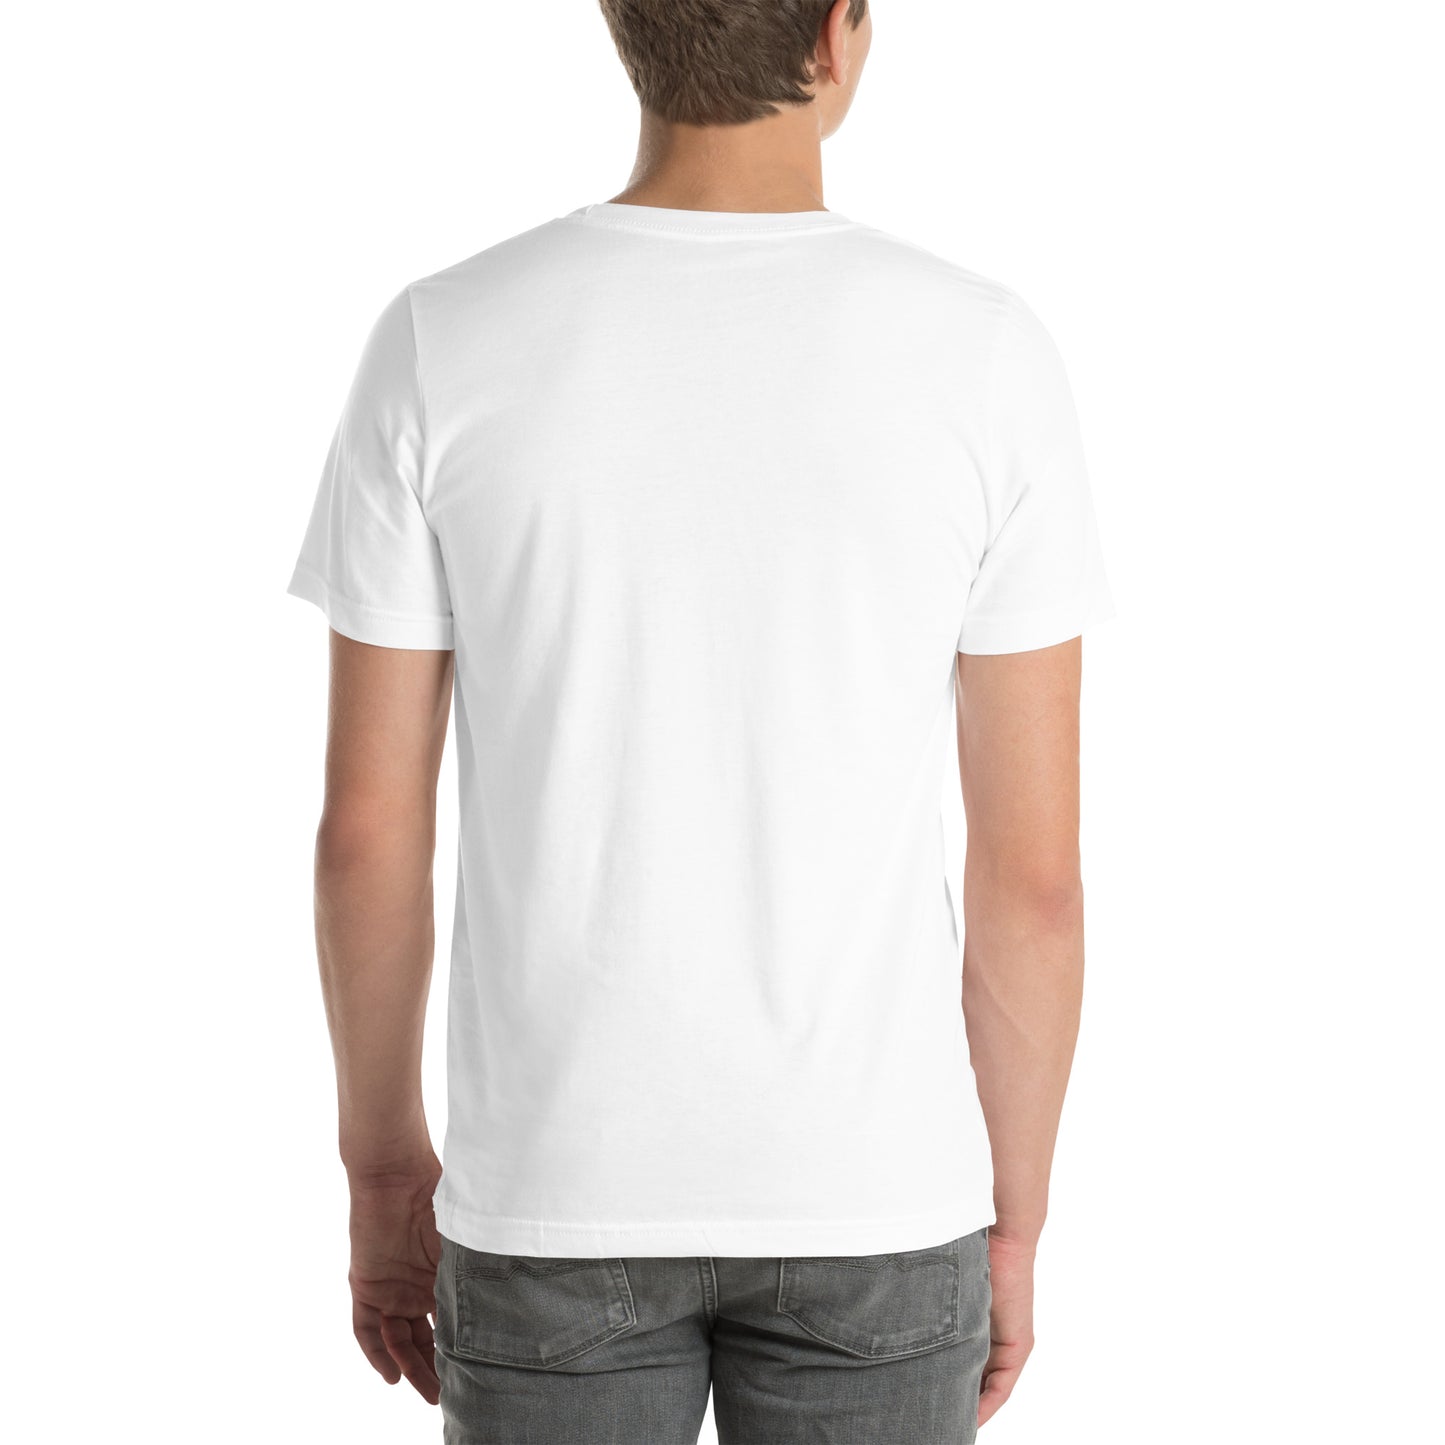 Wizard of Zenda White T-Shirt - Standard Logo